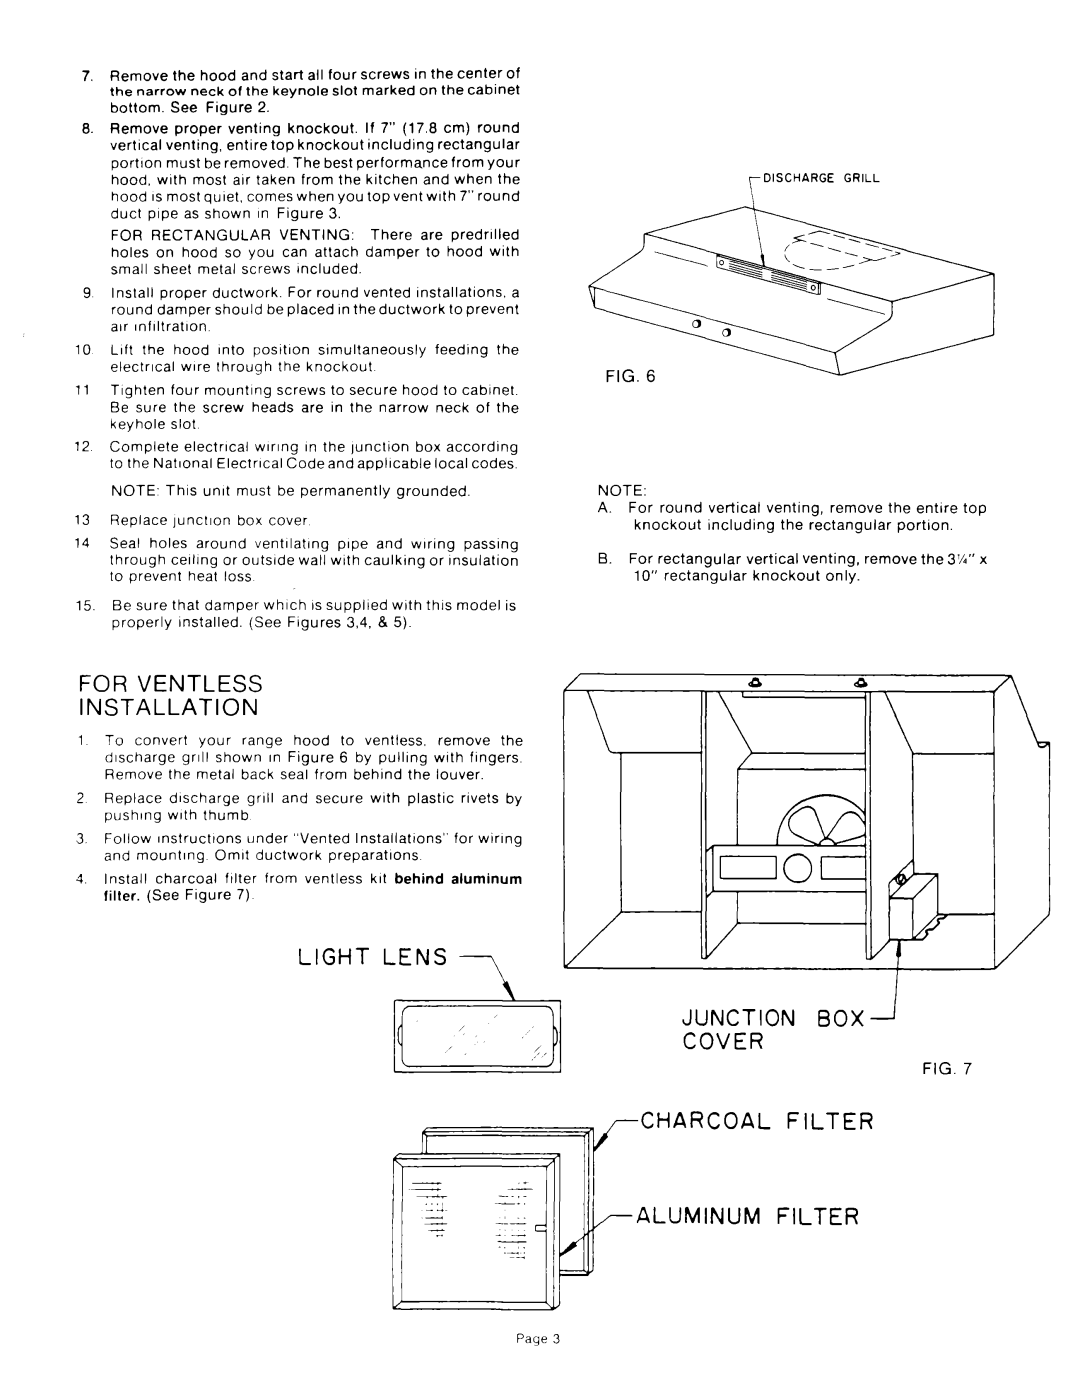 Whirlpool RH4300XL manual For Ventless, Installation, Light Lens Junction Box J Cover, CHARCOAL FILTER n UMINUM FILTER 